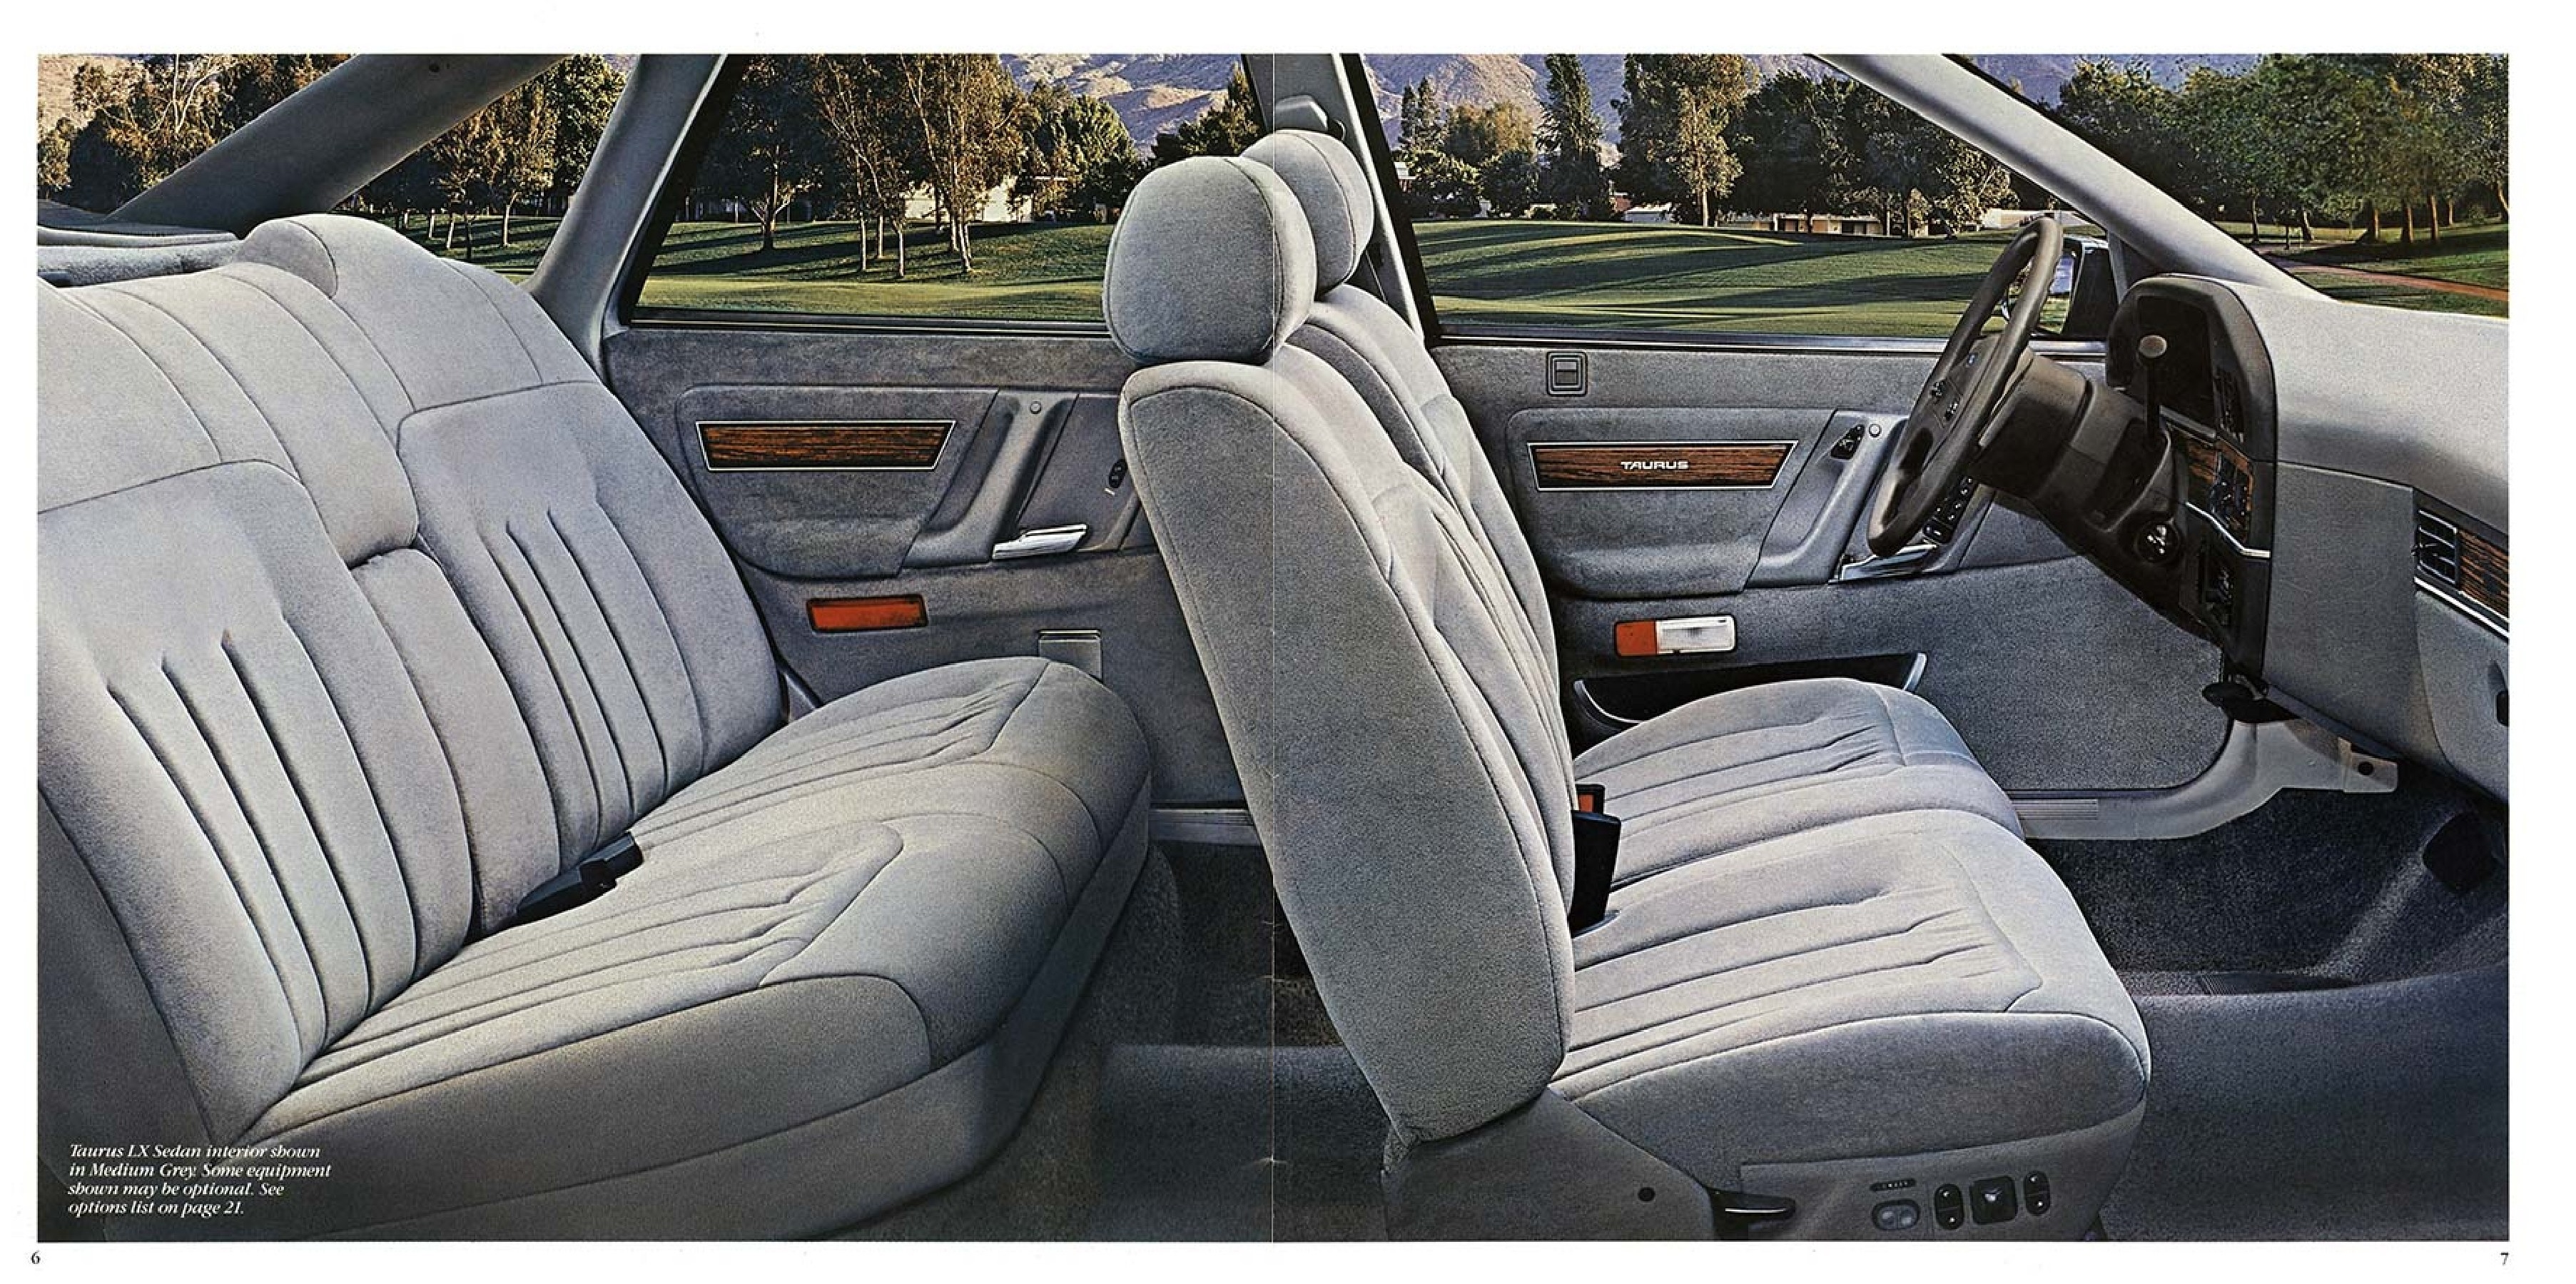 1987 Ford Taurus 06-07